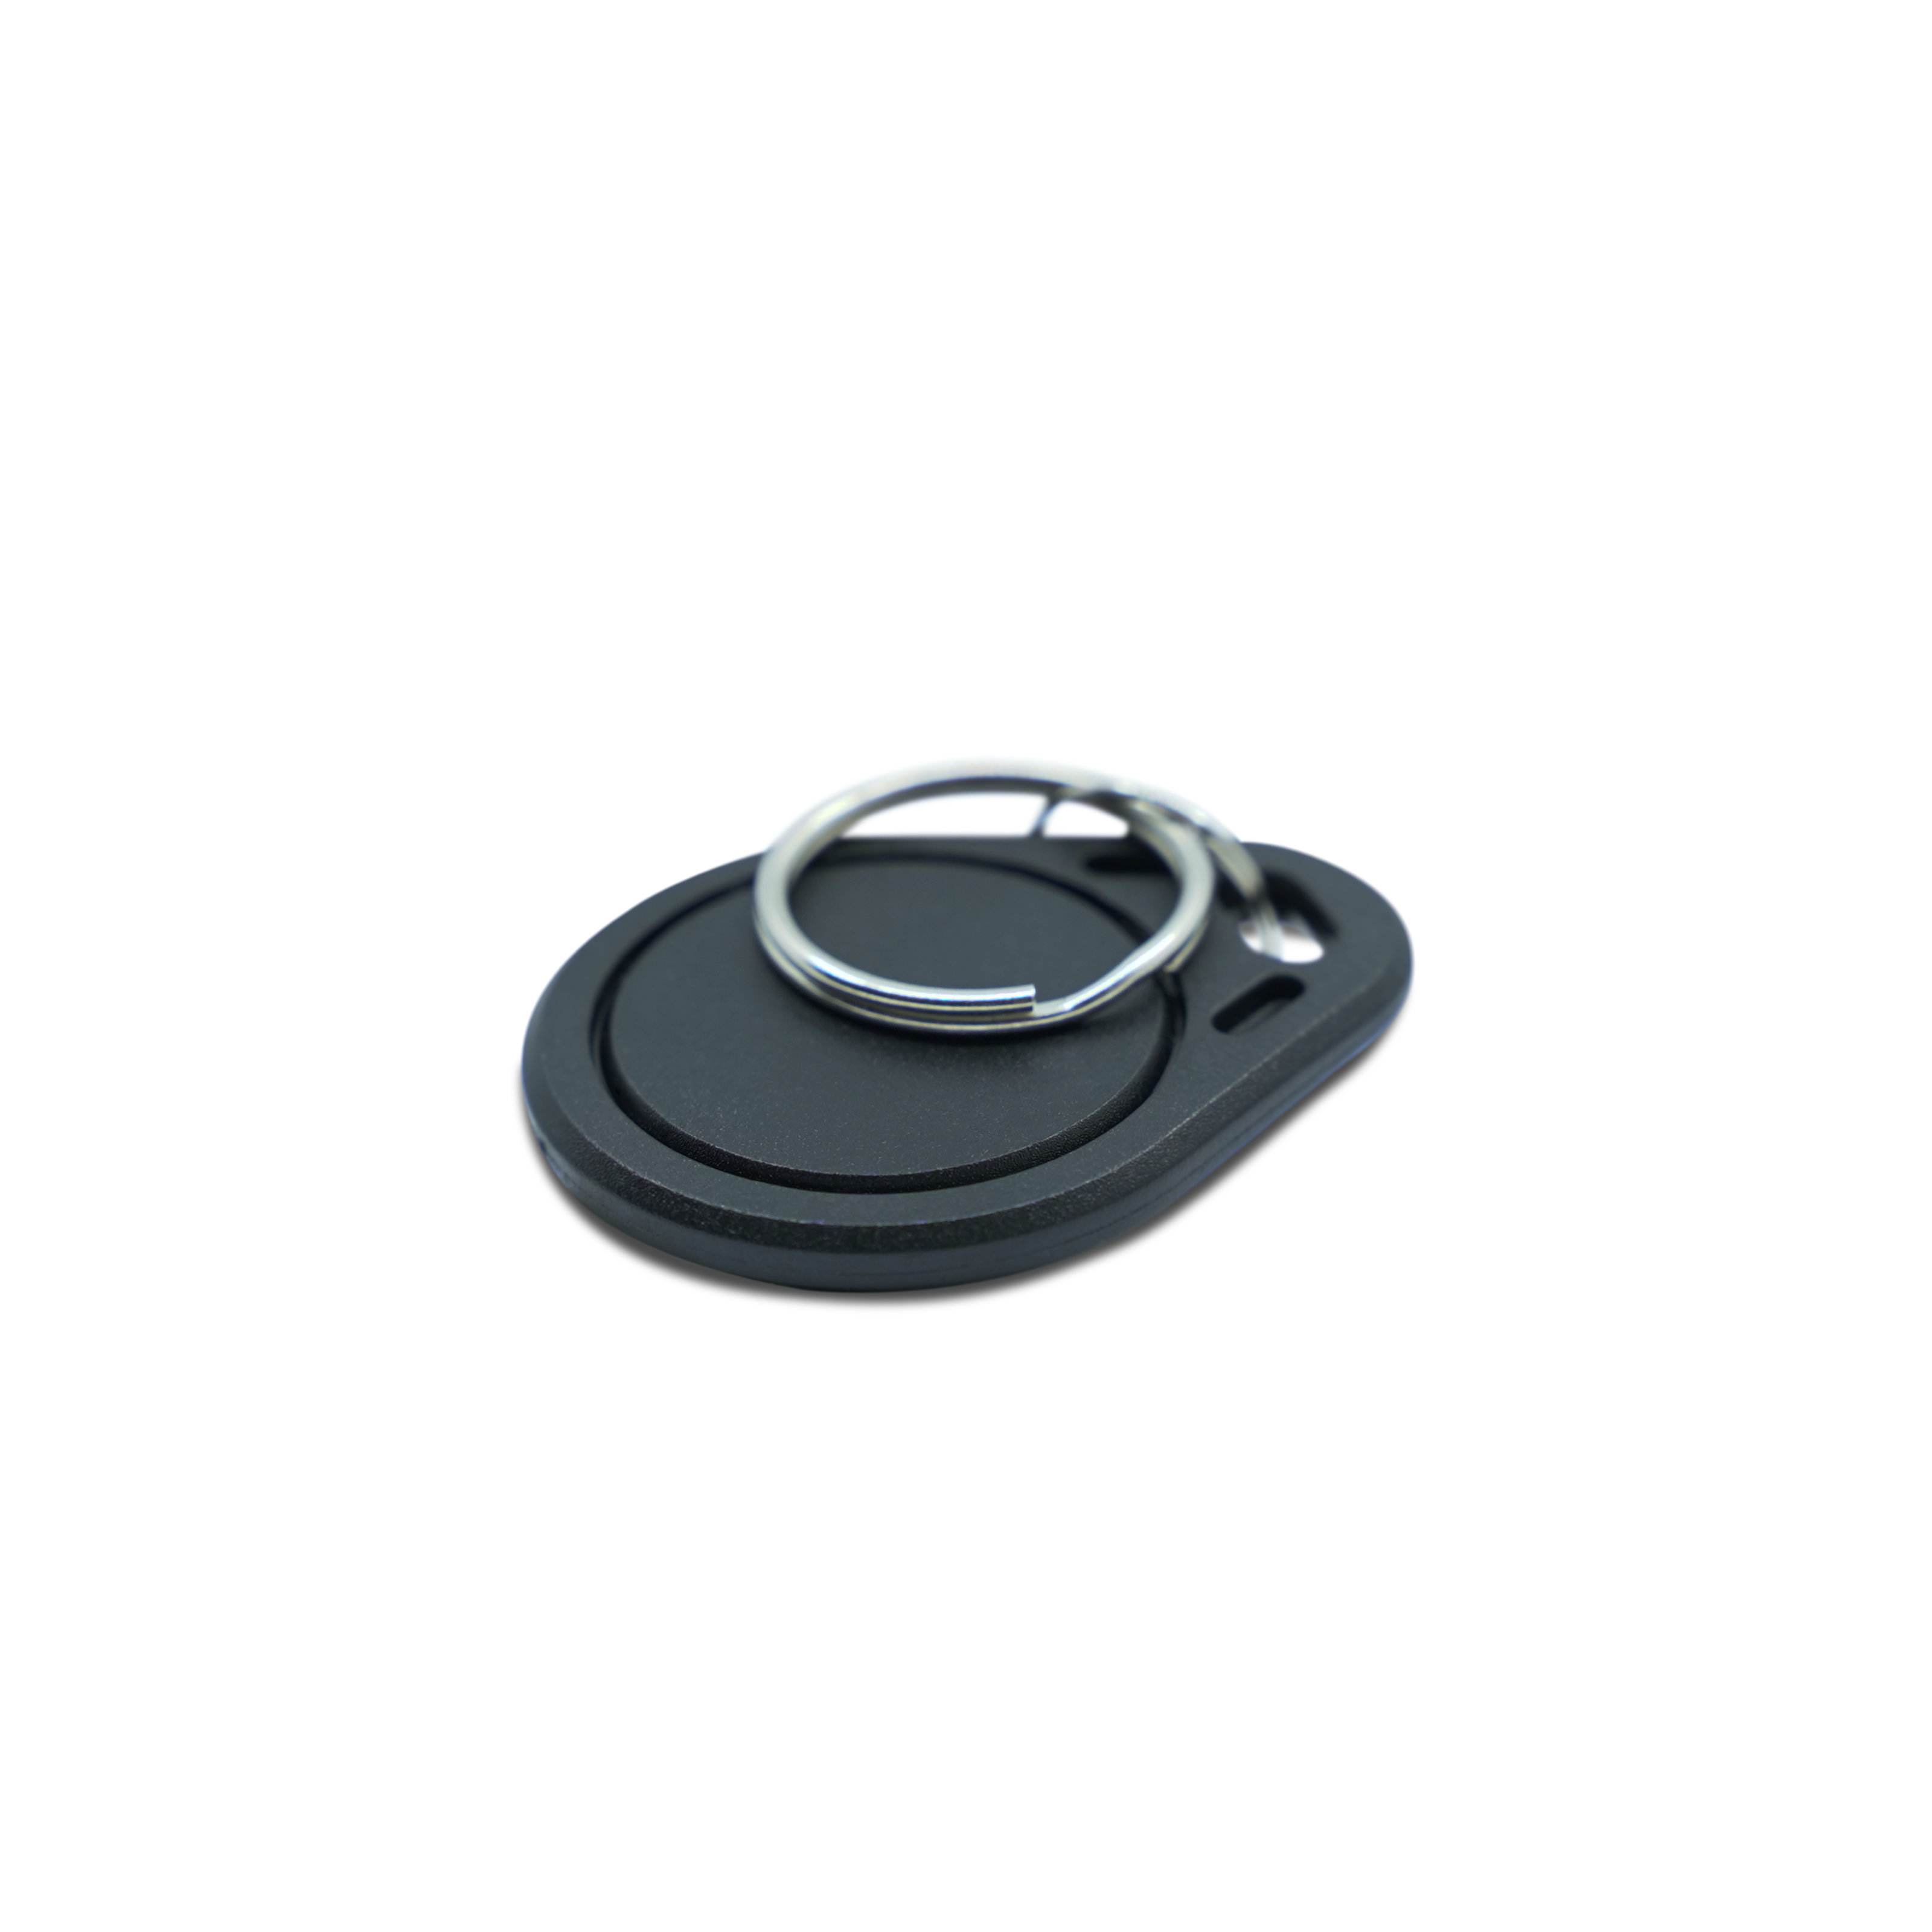 NFC tag ABS - 40 x 32 mm - MIFARE DESFire EV1 4k - 4096 Byte - black